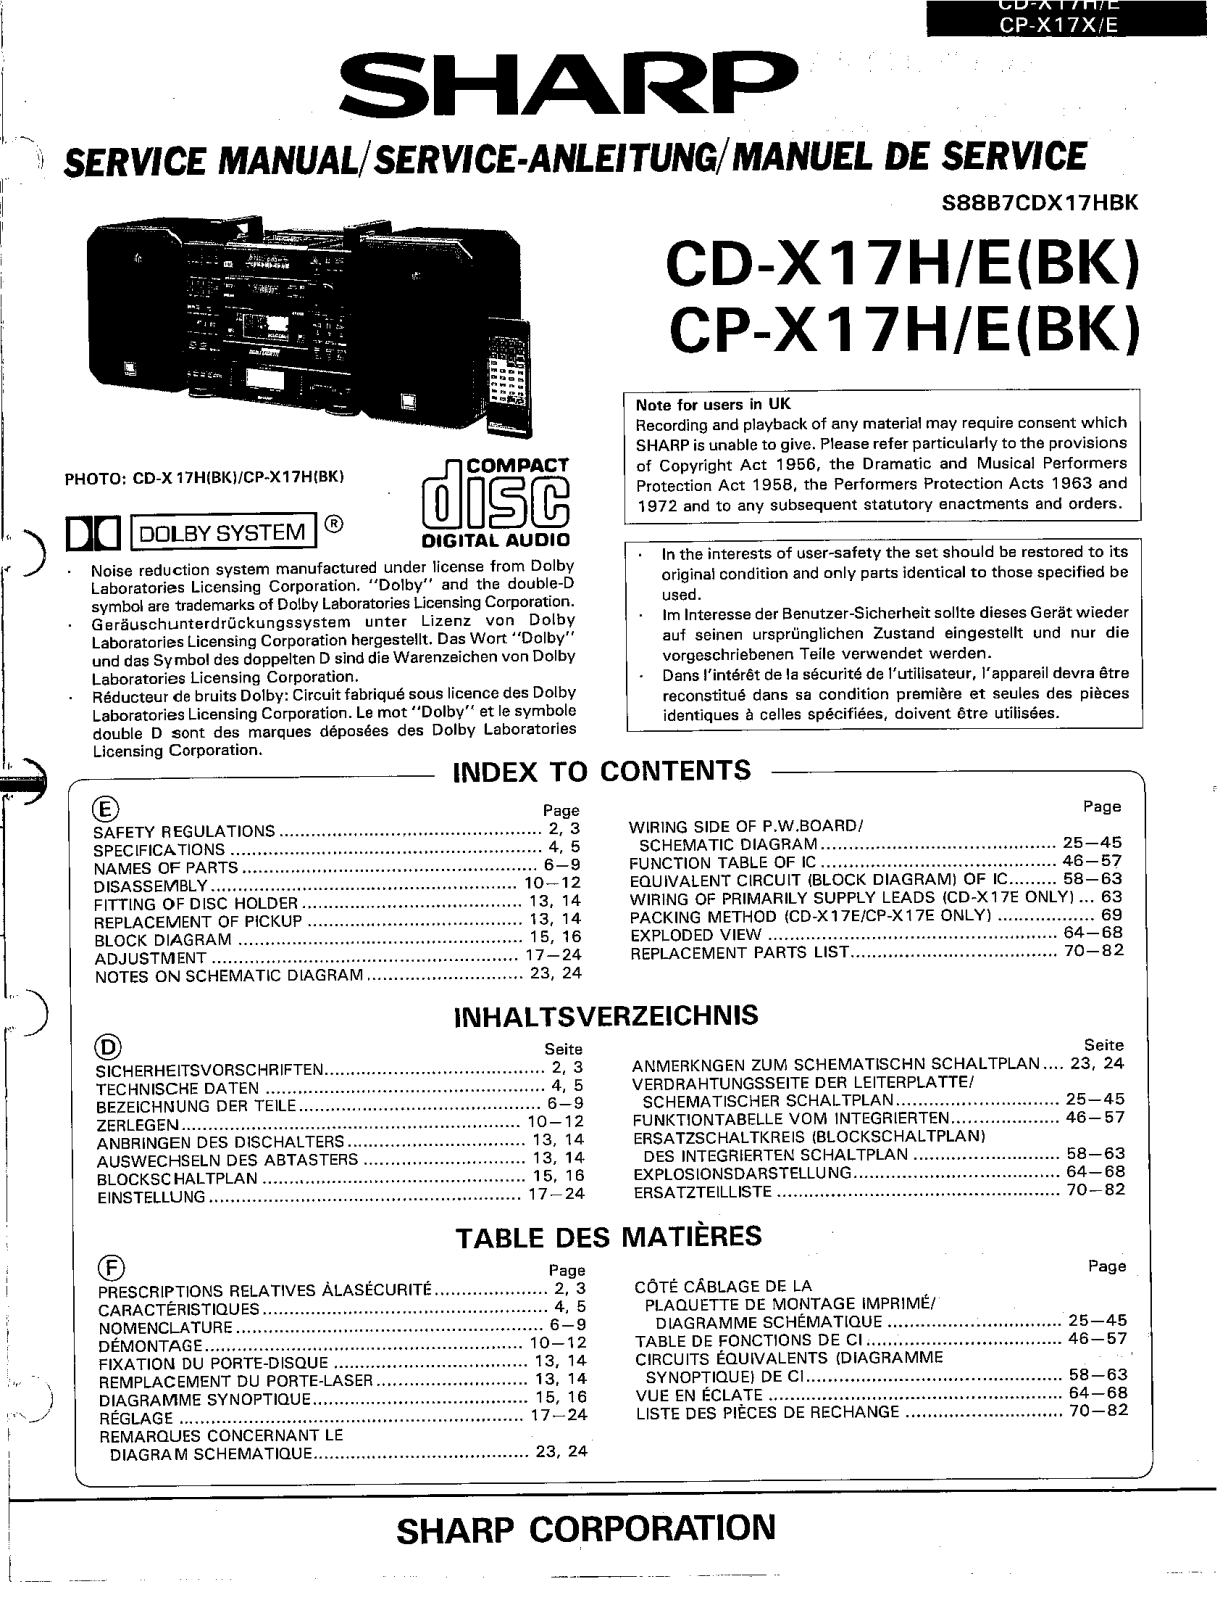 Sharp CD-X17H-E, CP-X17H-E Schematic